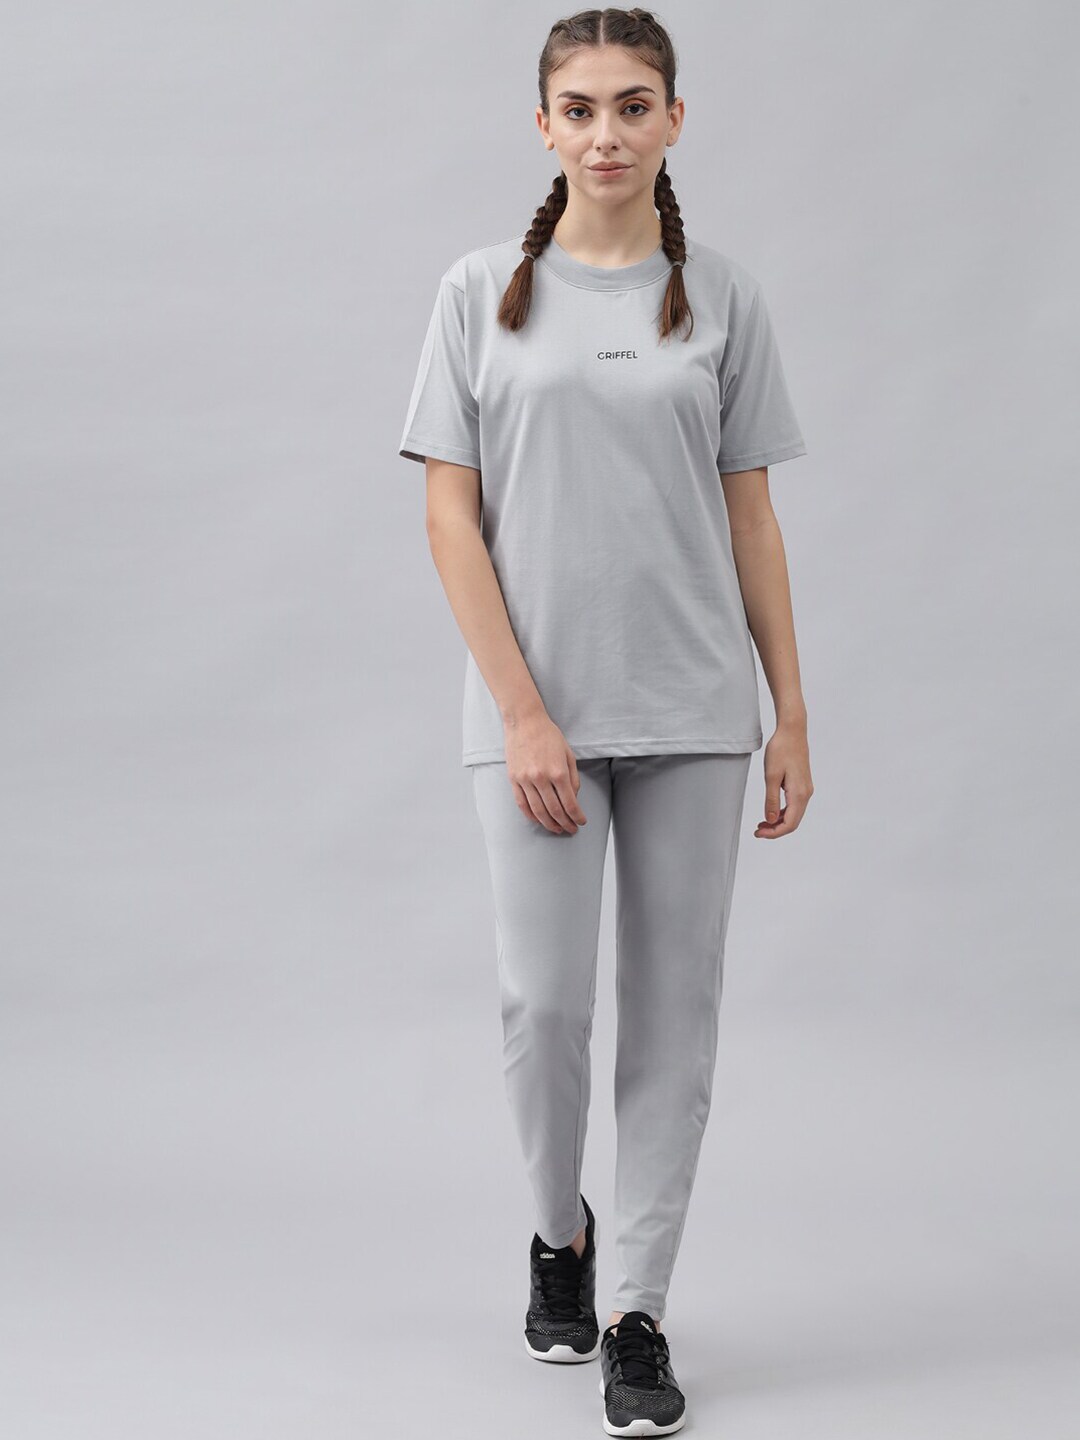 GRIFFEL Women Grey Melange Cotton Track Suit Price in India